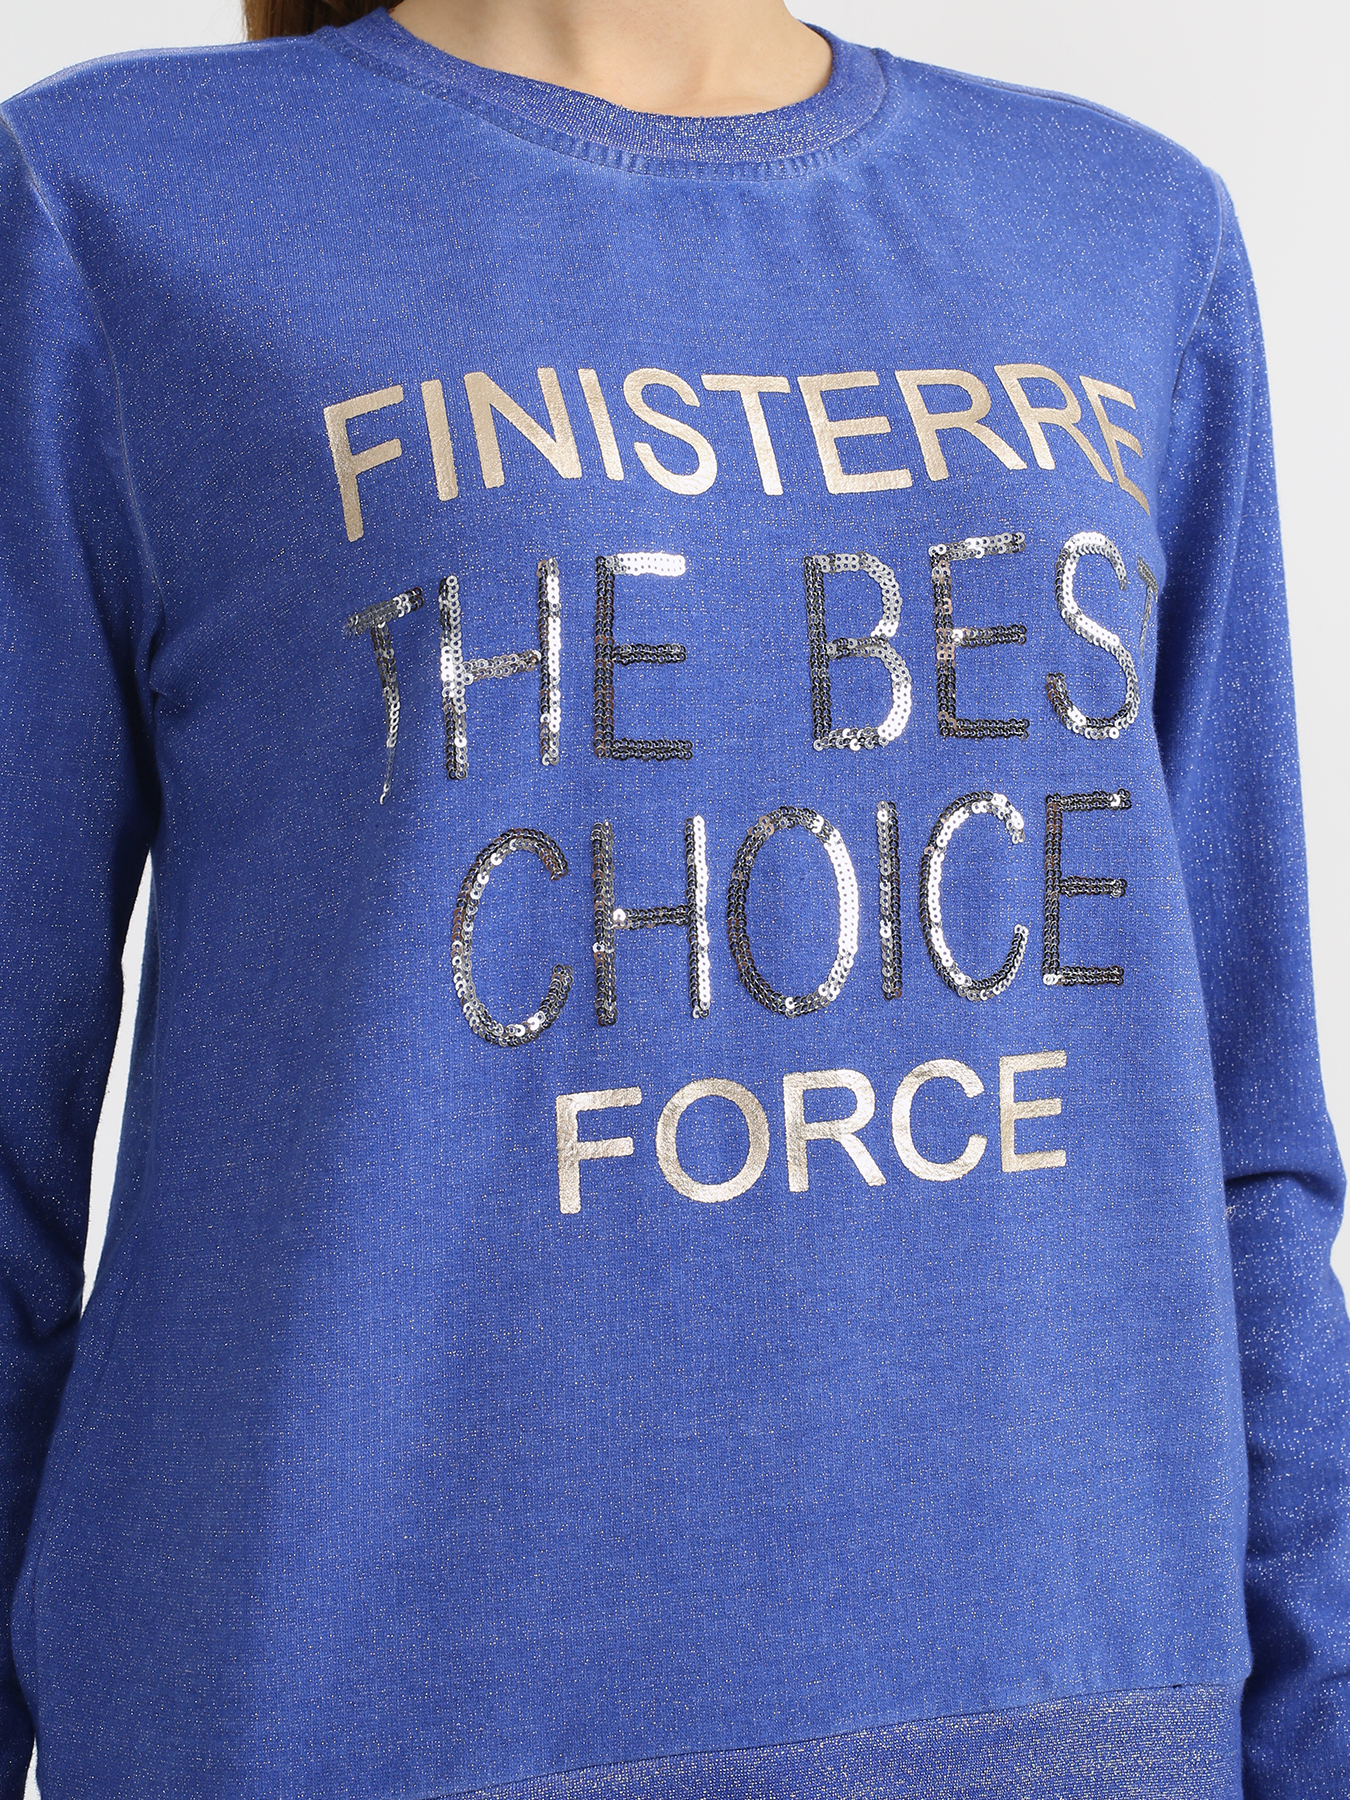 Finisterre Force Джемпер с пайетками 326149-020 Фото 3